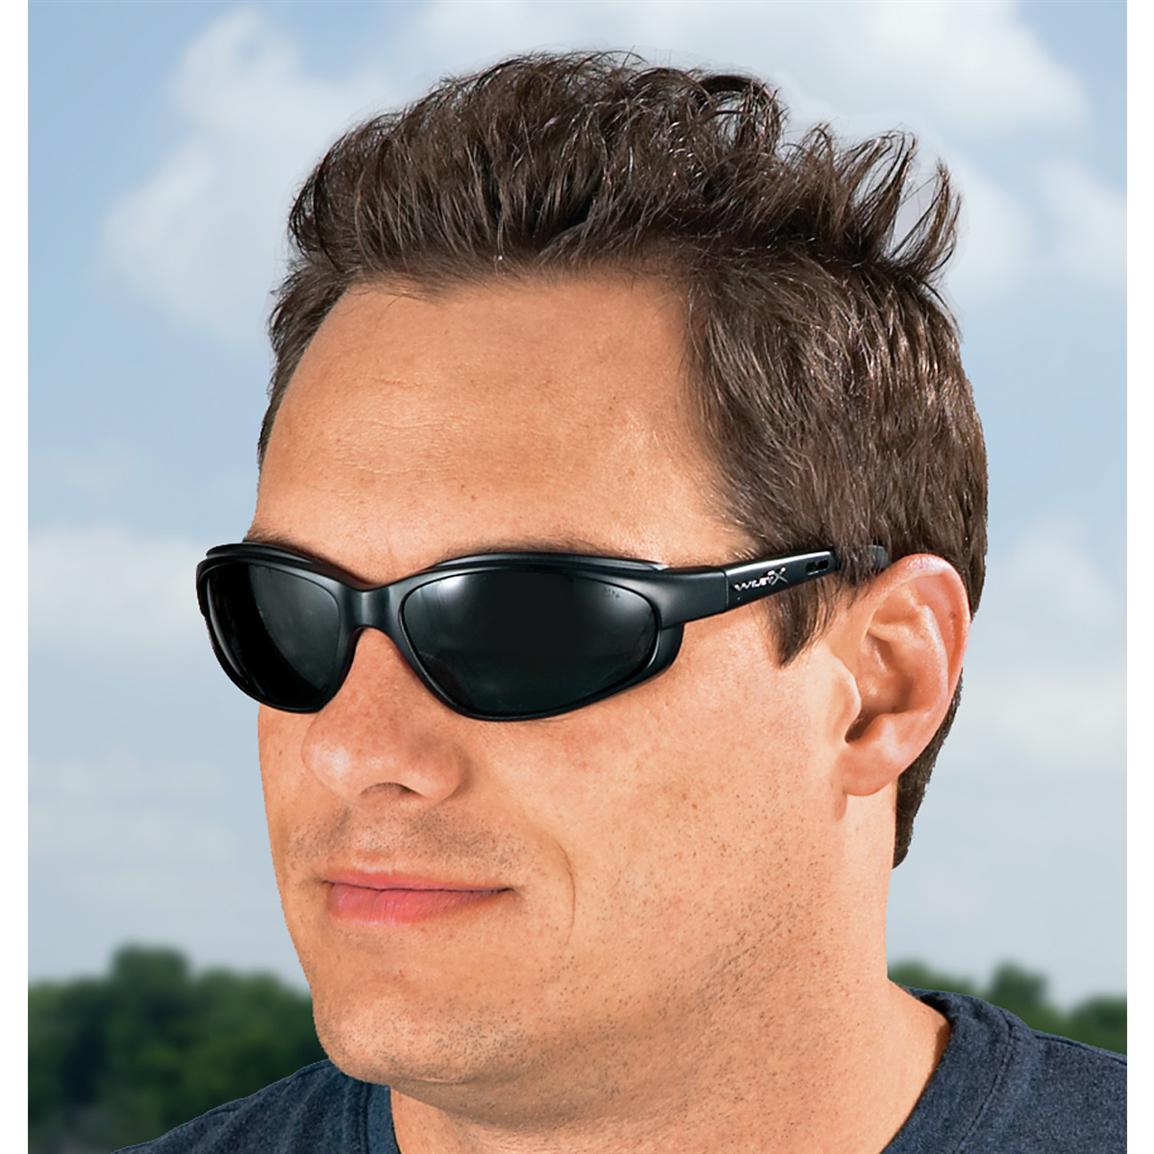 Wiley X® XL - 1 Sunglasses - 122989, Sunglasses & Eyewear at Sportsman